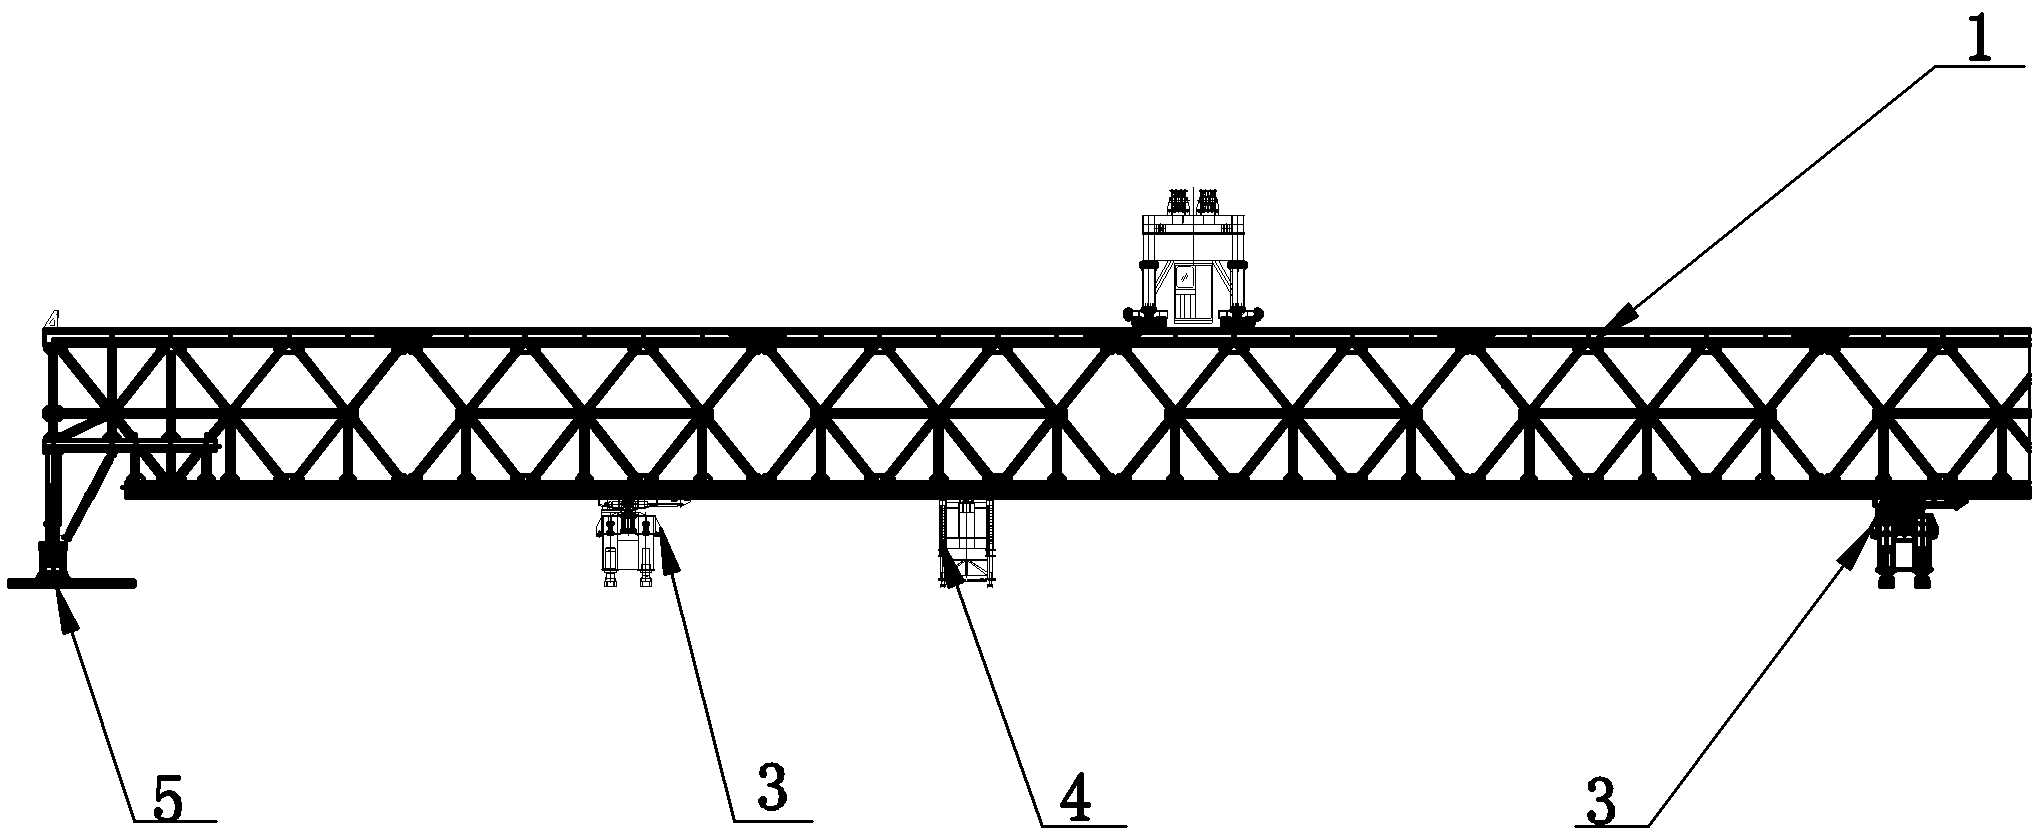 Section assembling bridge girder erection machine